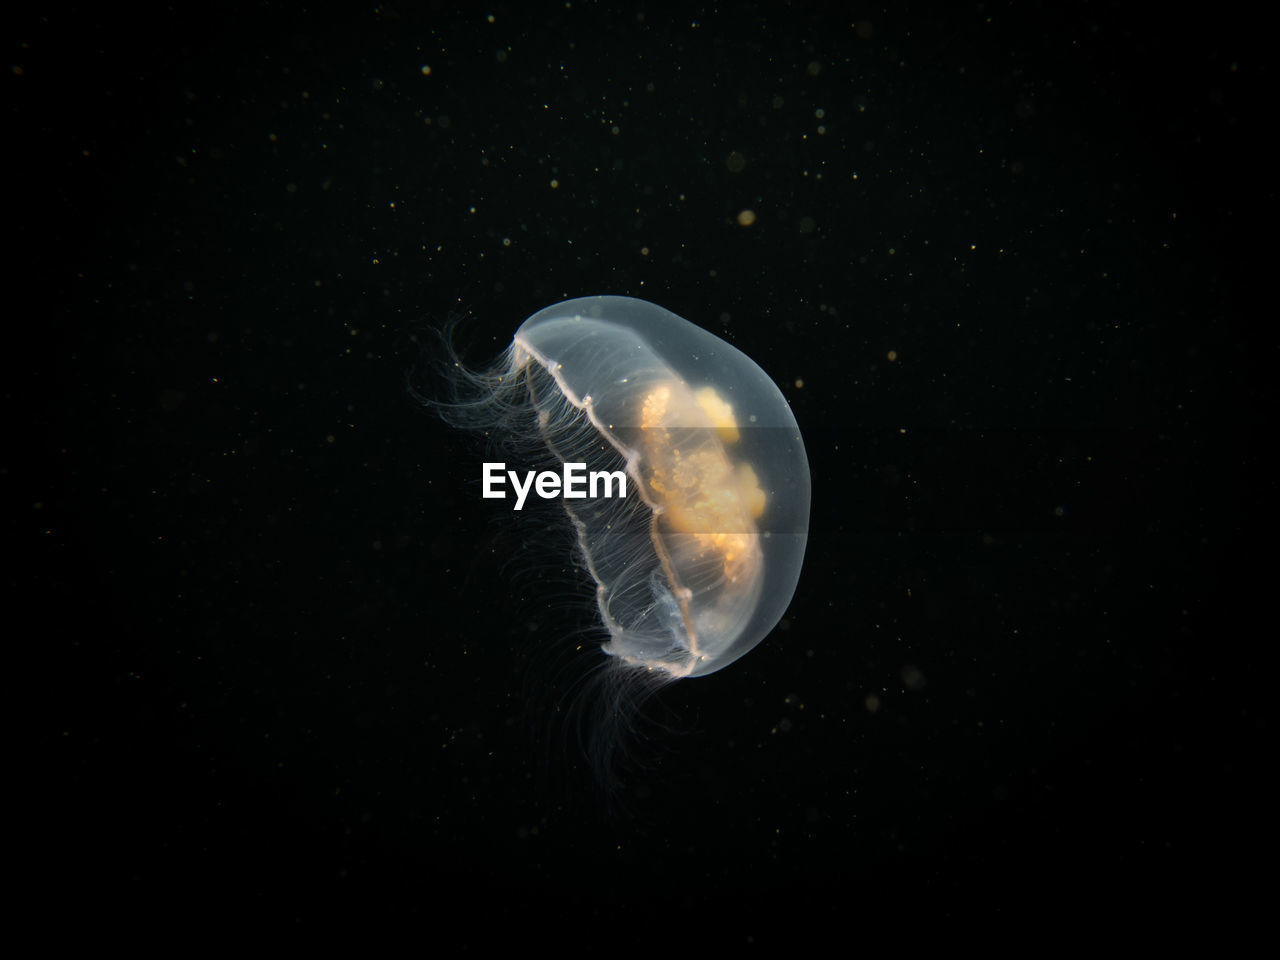 jellyfish swimming against black background